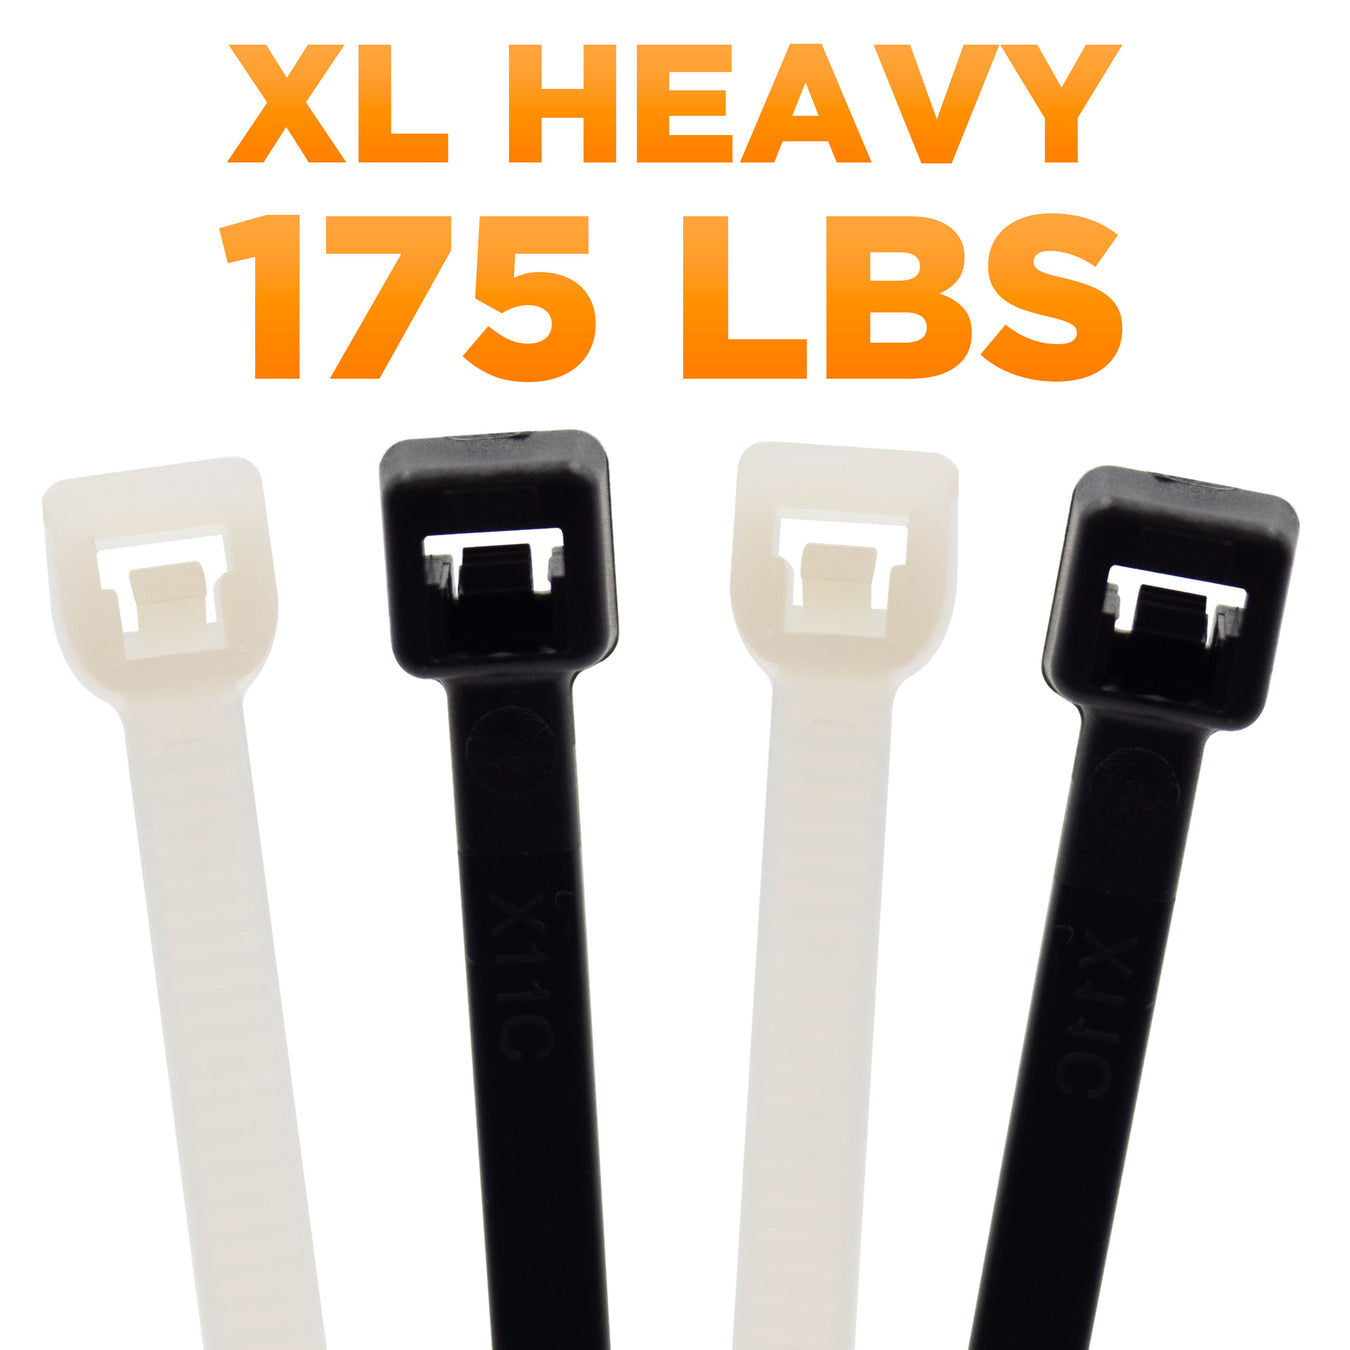 Extra Heavy Duty Cable Ties (175 lbs)